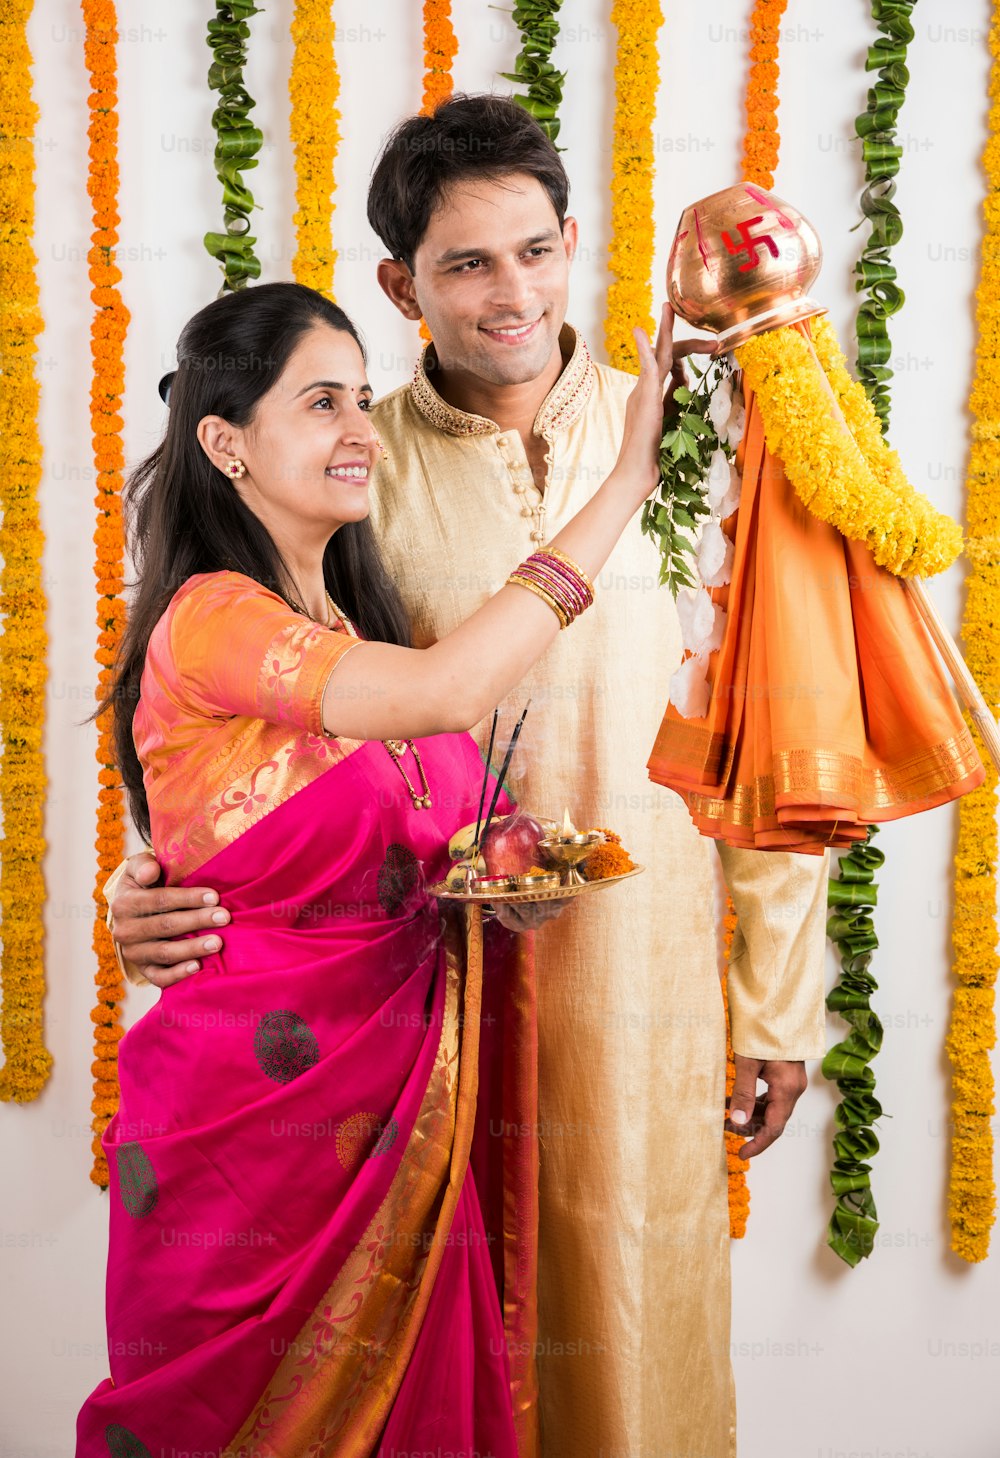 Pareja india inteligente haciendo gudhi padwa puja, pareja asiática y puja thali, pareja joven india realizando puja o pooja, año nuevo hindú gudhi padwa / gudi padwa, pareja india rezando en ropa tradicional